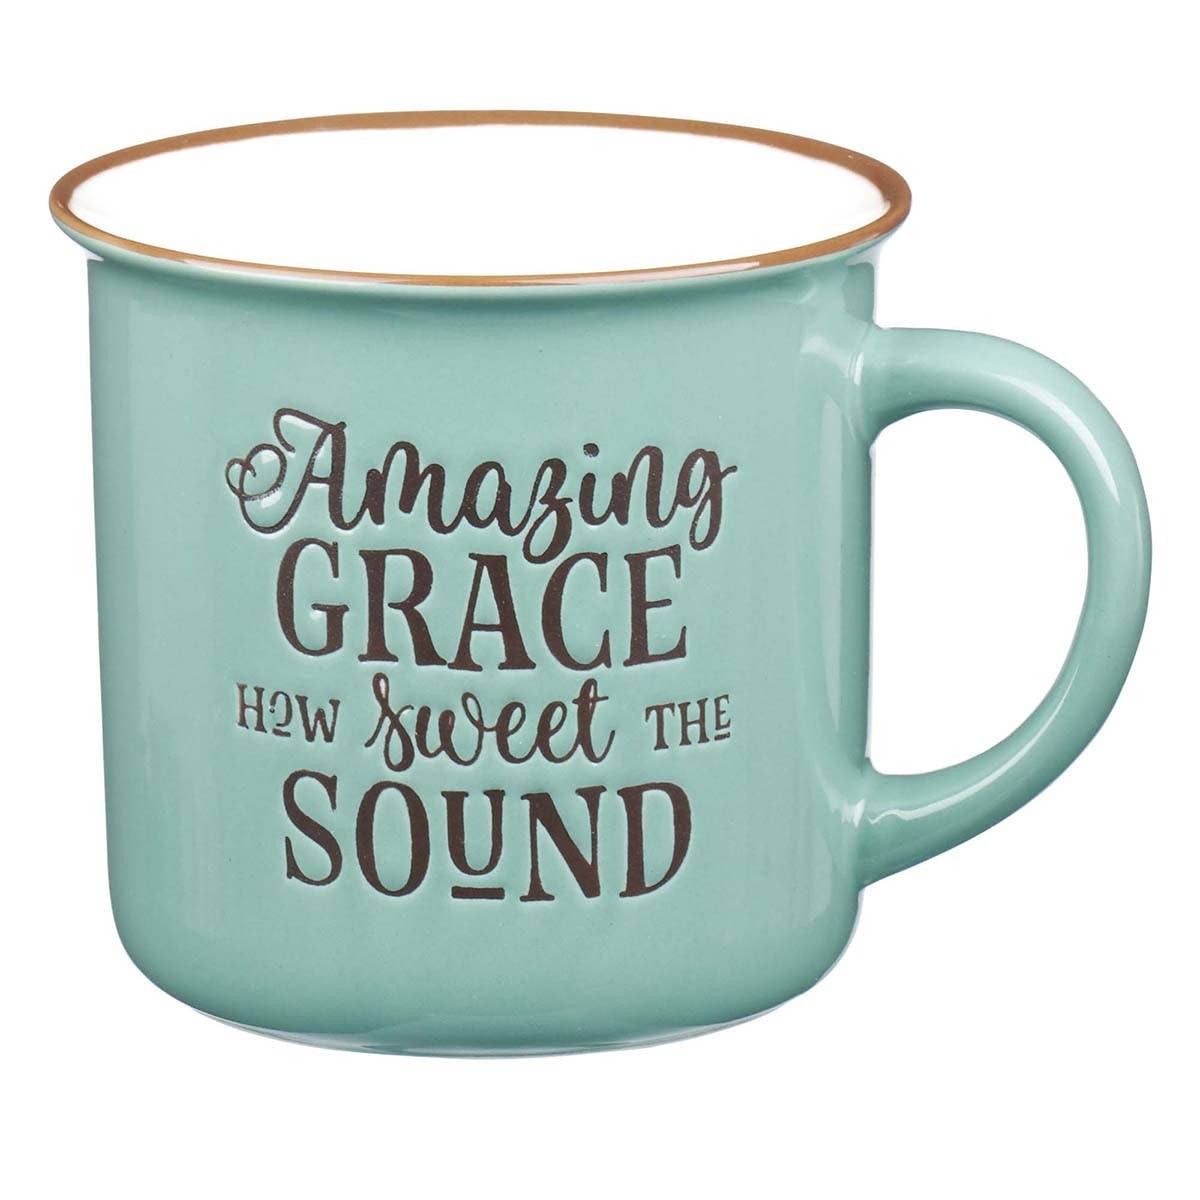 Christian Art Gifts - Amazing Grace Green Camp-style Coffee Mug